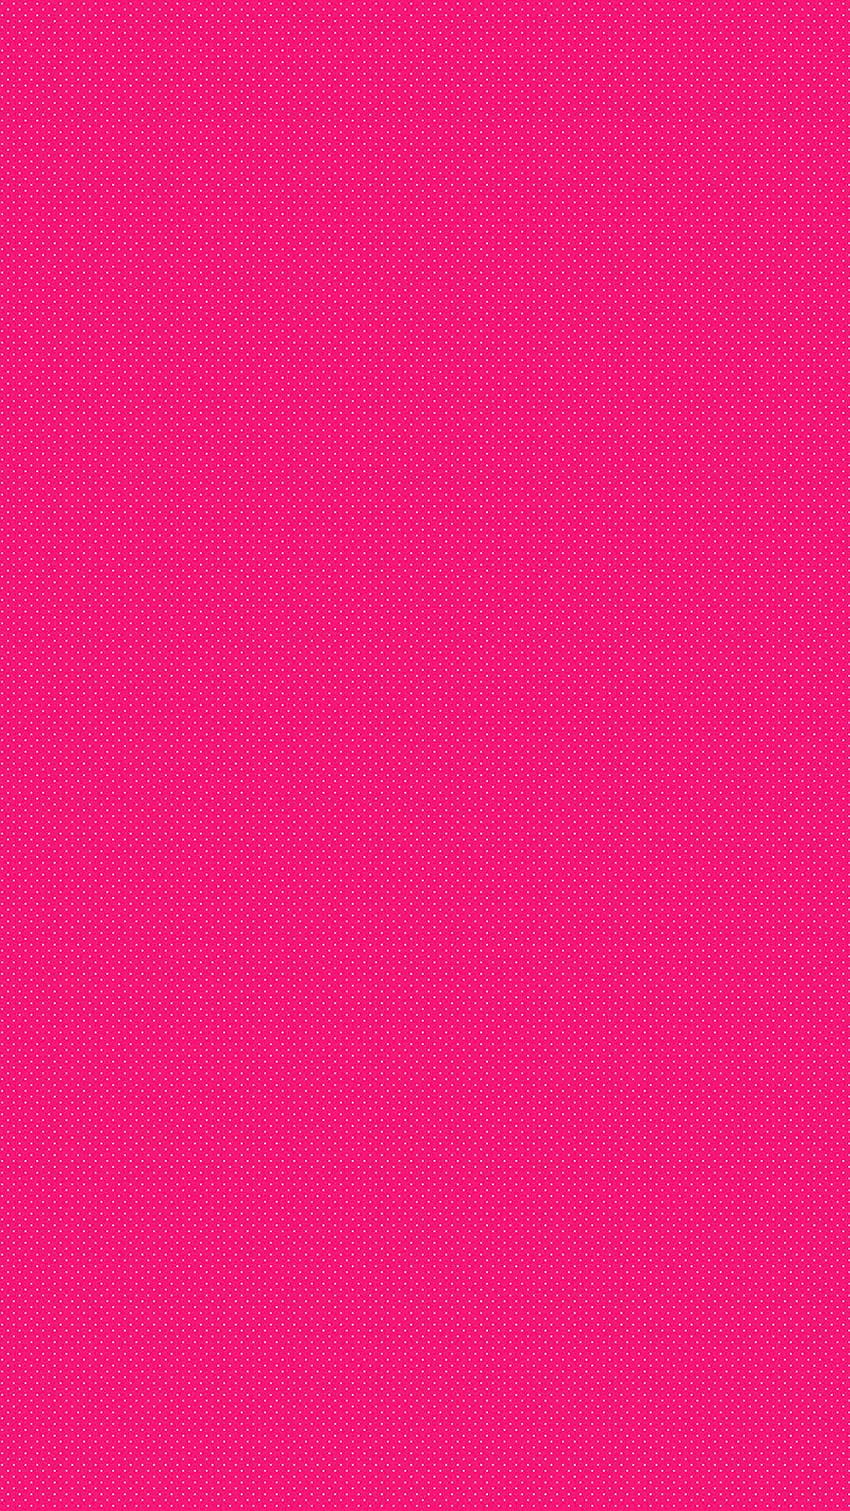 Solid Pink Background Images  Free Download on Freepik